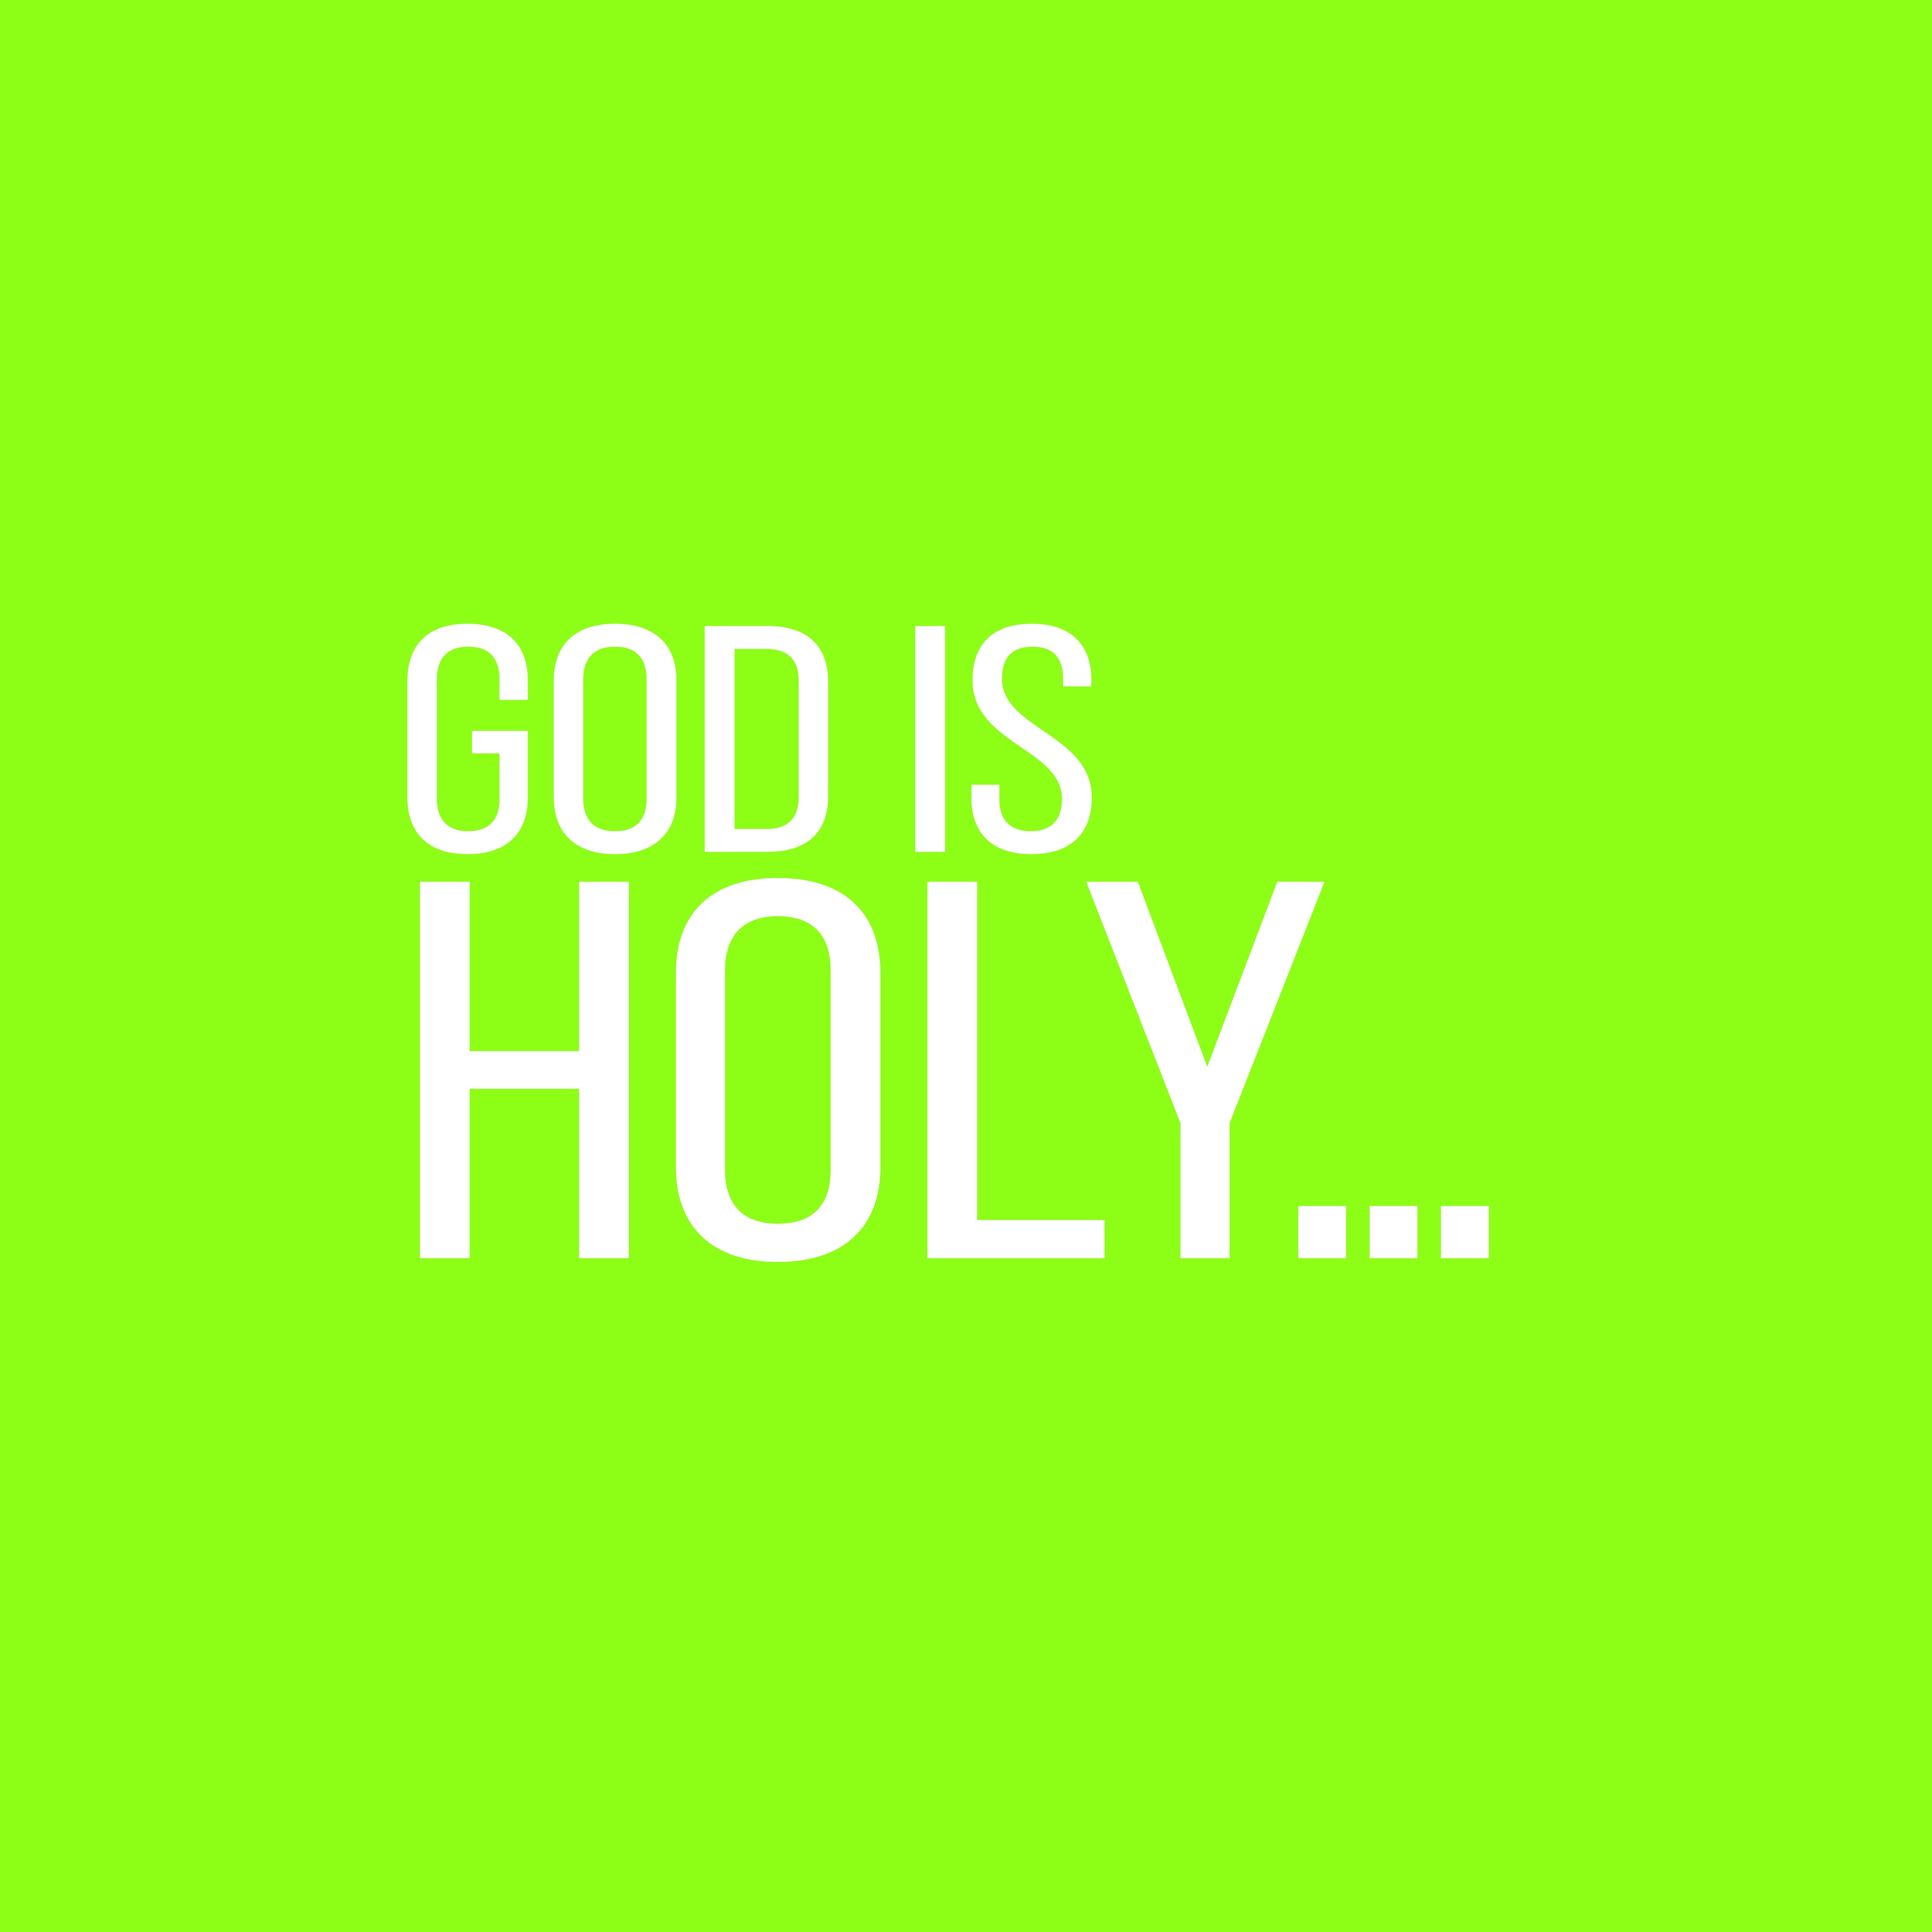 God is holy_final-01.jpg